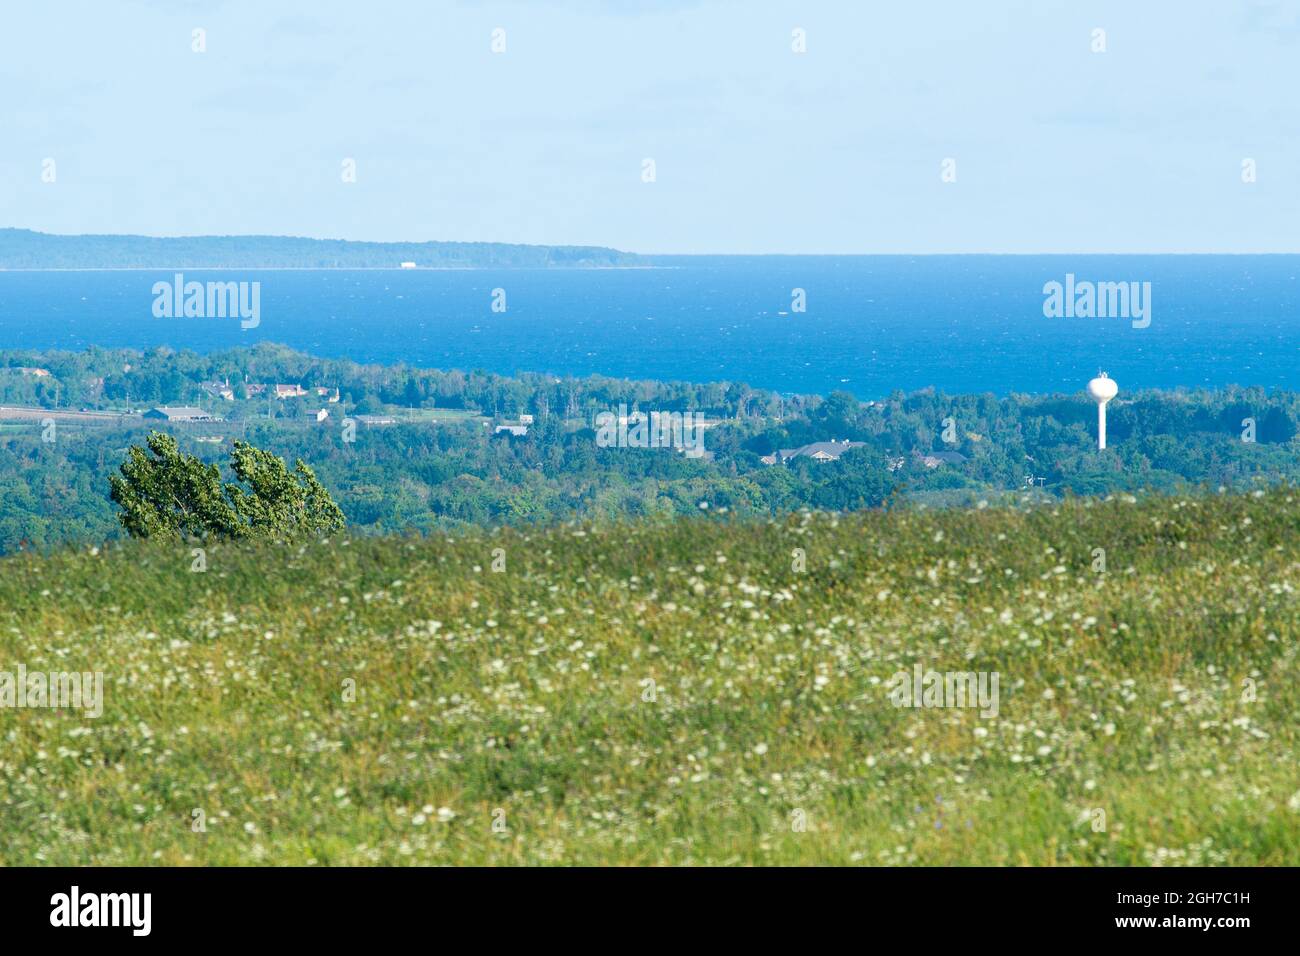 Landscape photo of the town of Thornbury, Ontario, Canada. Stock Photo